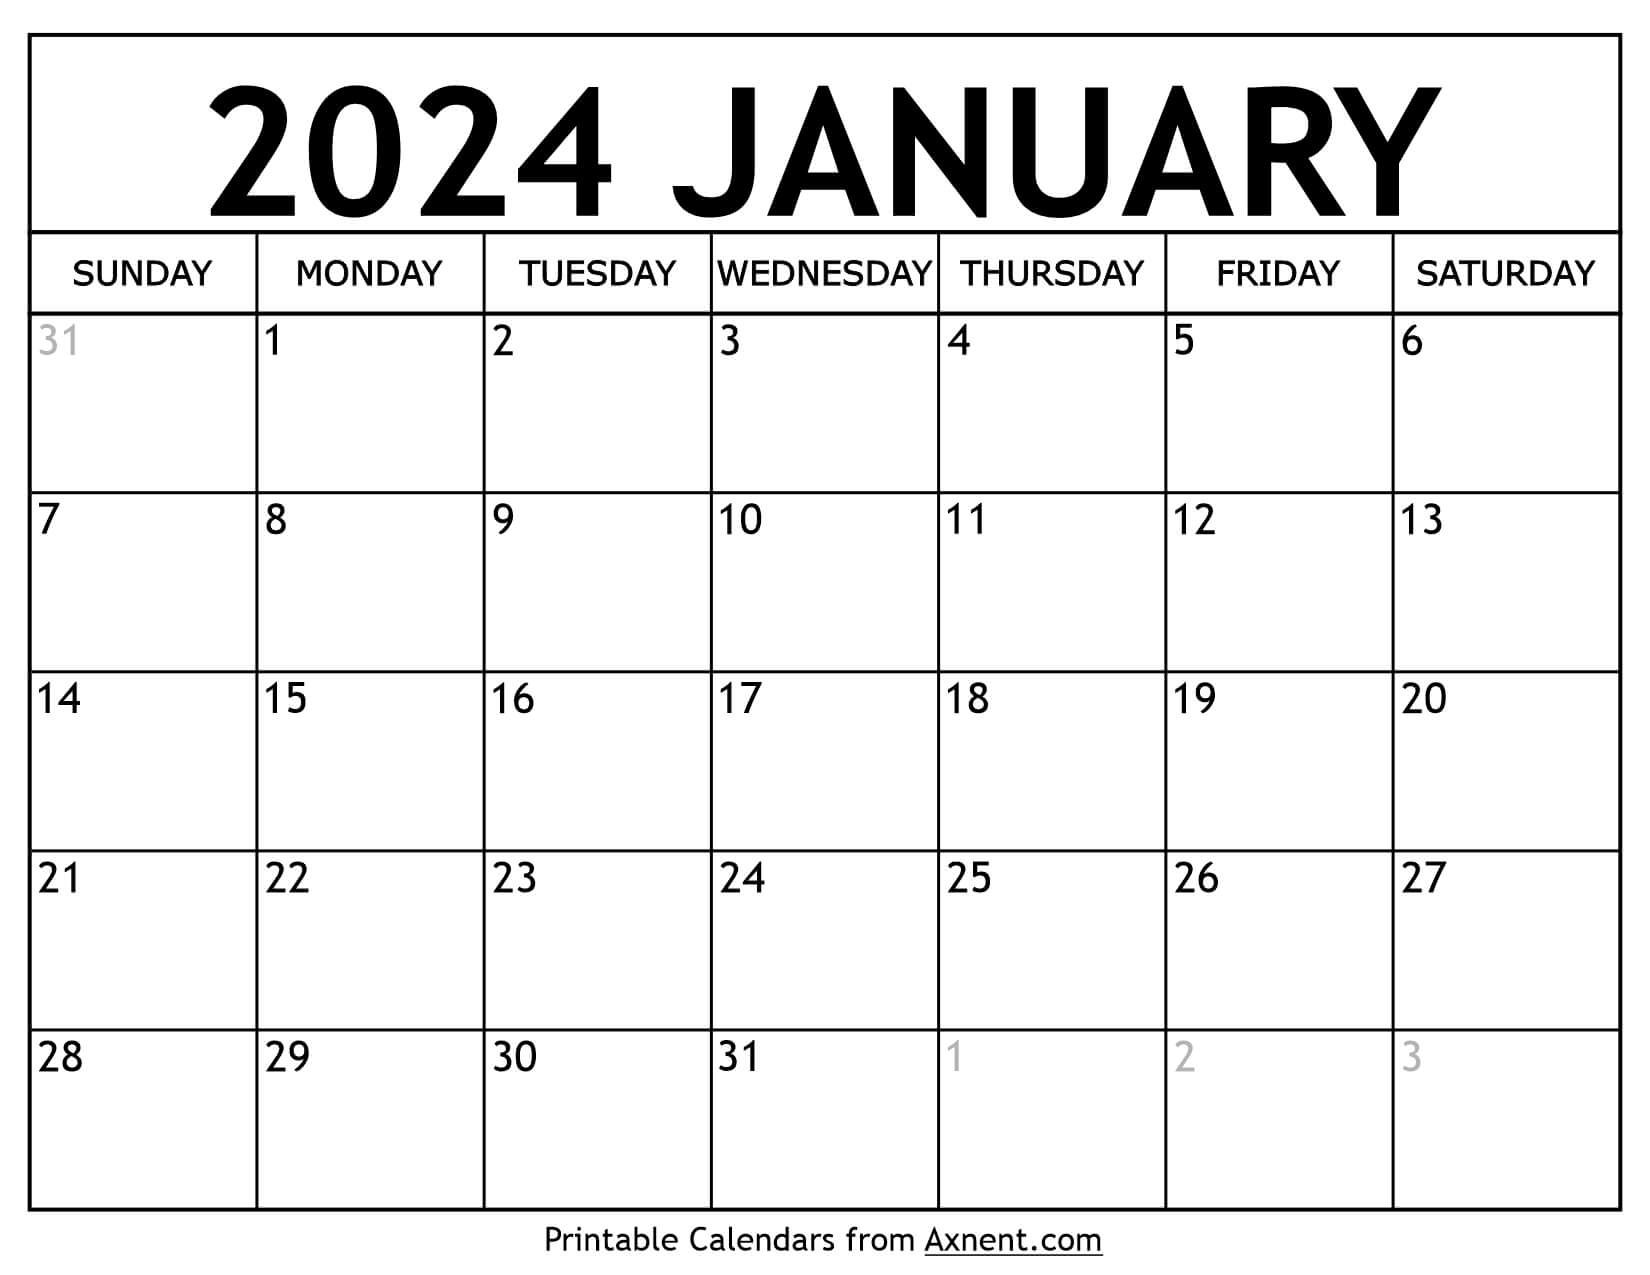 Printable January 2024 Calendar Template - Print Now for January Calendar 2024 Free Printable